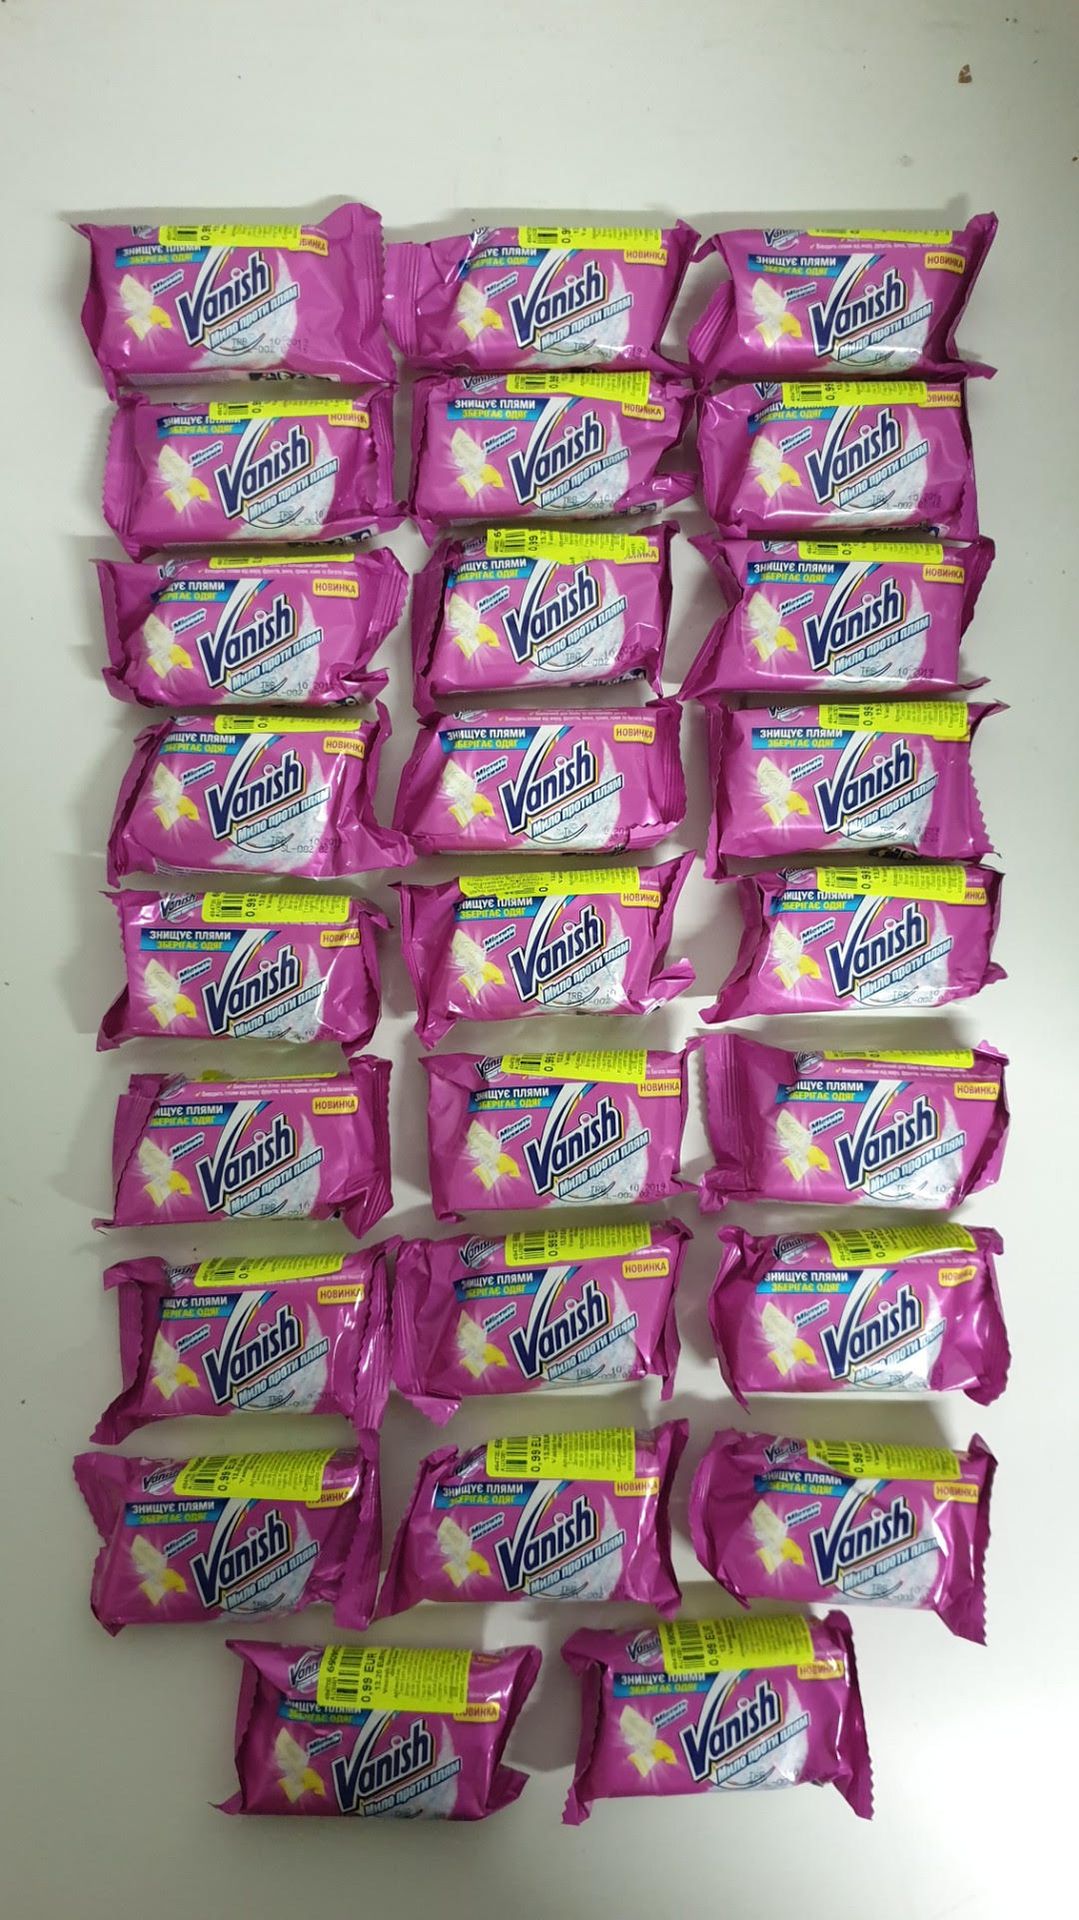 Null Pack of 10 packs of vanish wipes